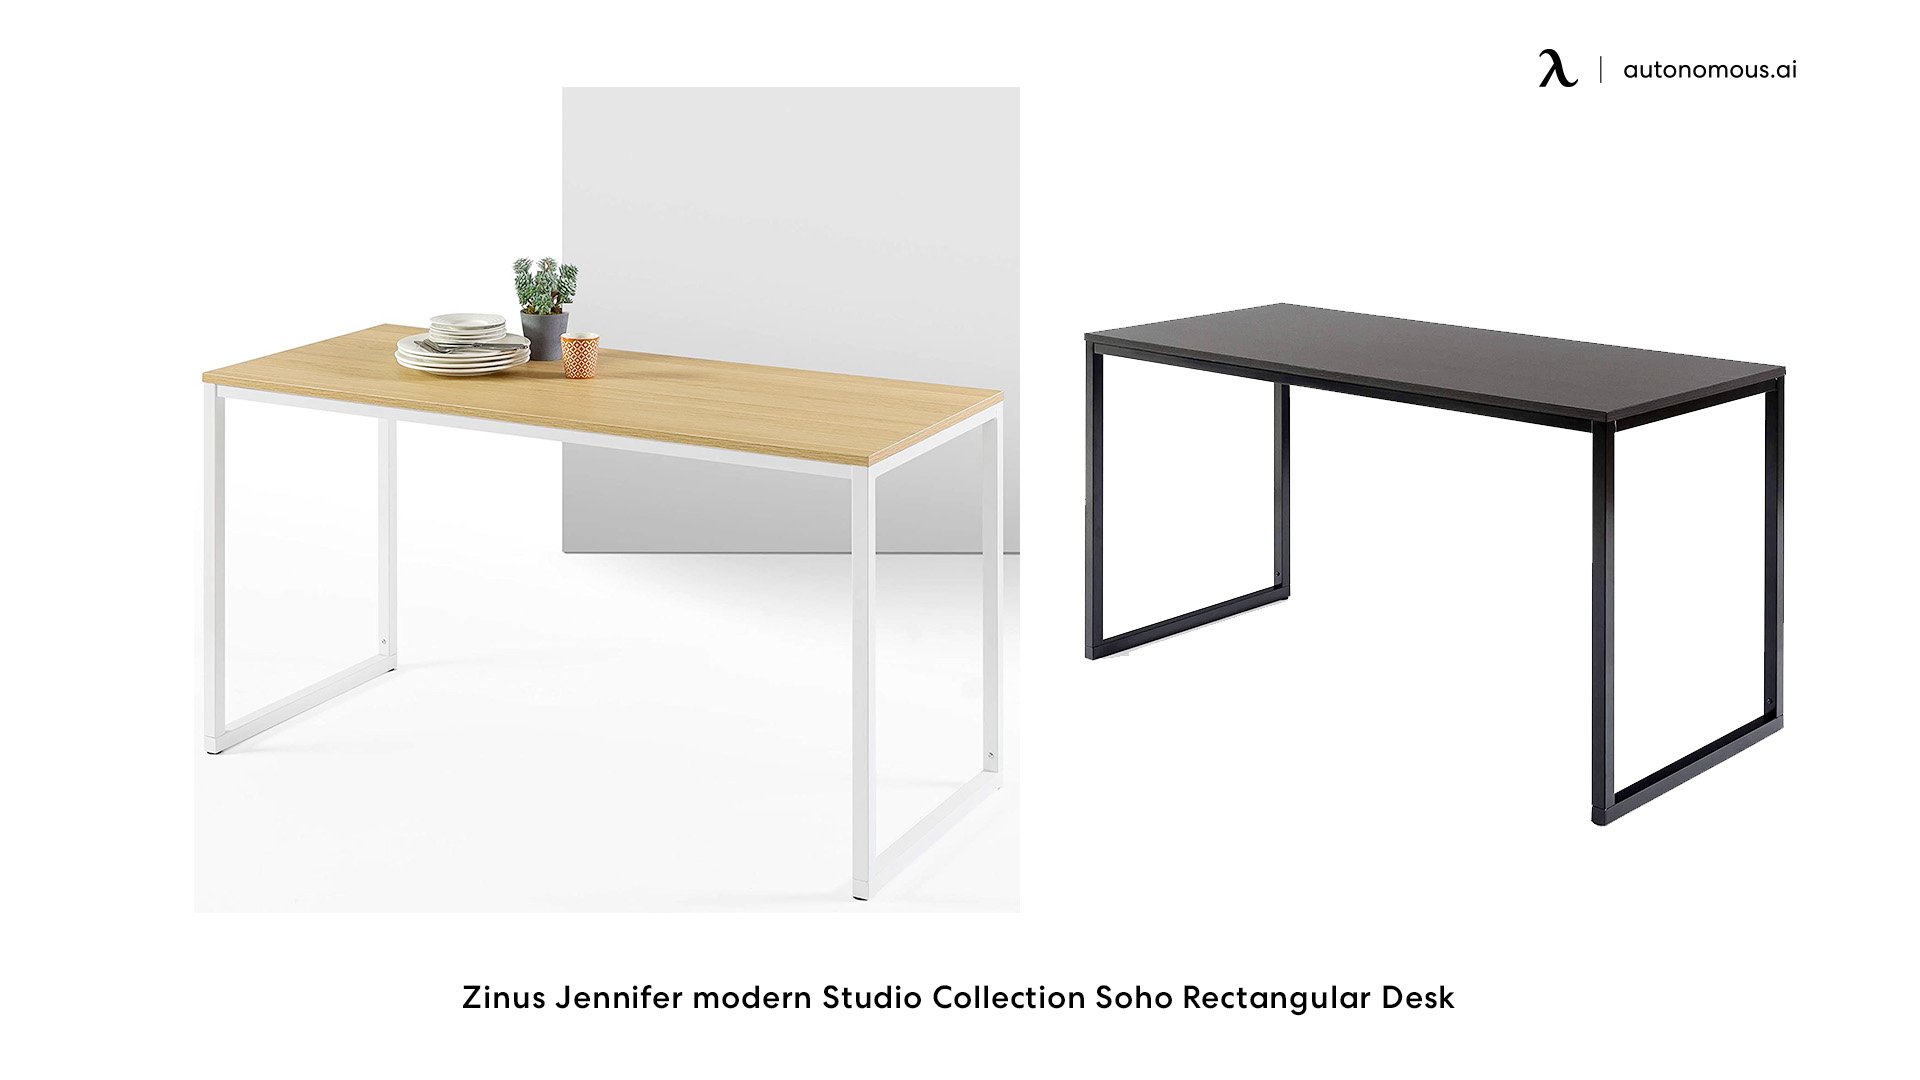 Zinus Jennifer modern Studio Collection Soho Rectangular Desk